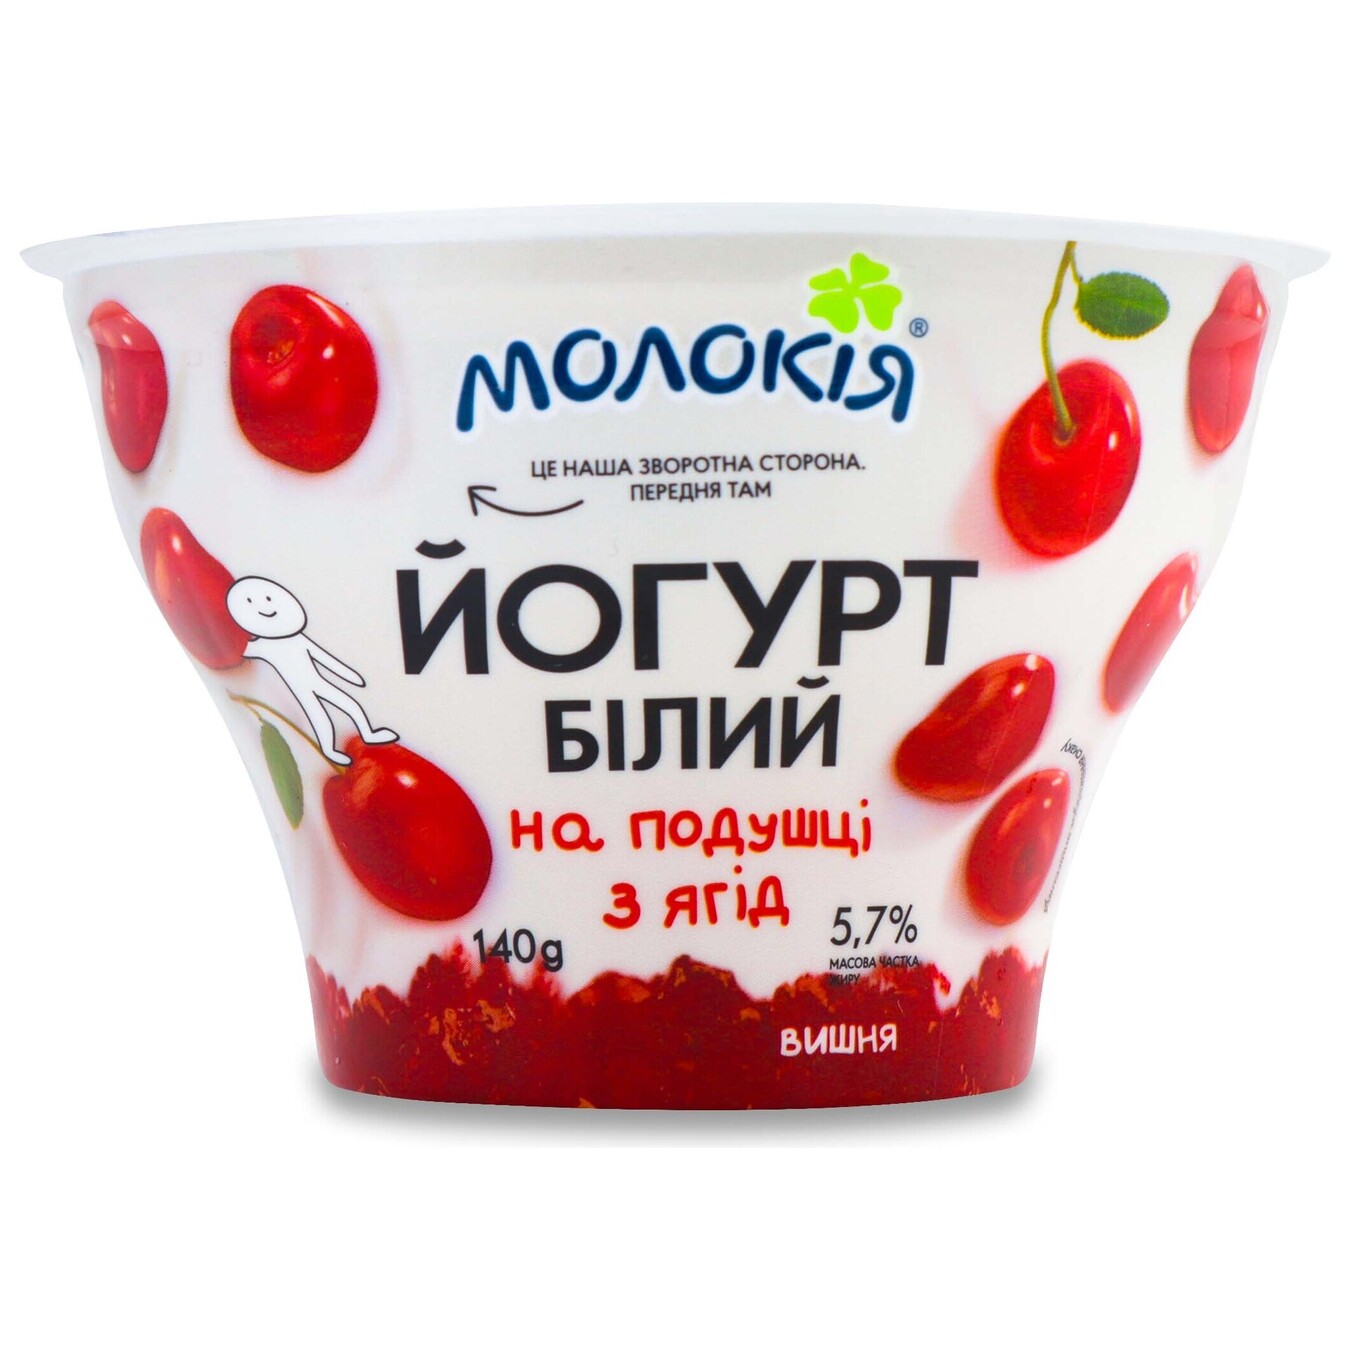 Molokiya white yogurt on a pillow of Cherry berries 5.7% cup 140g